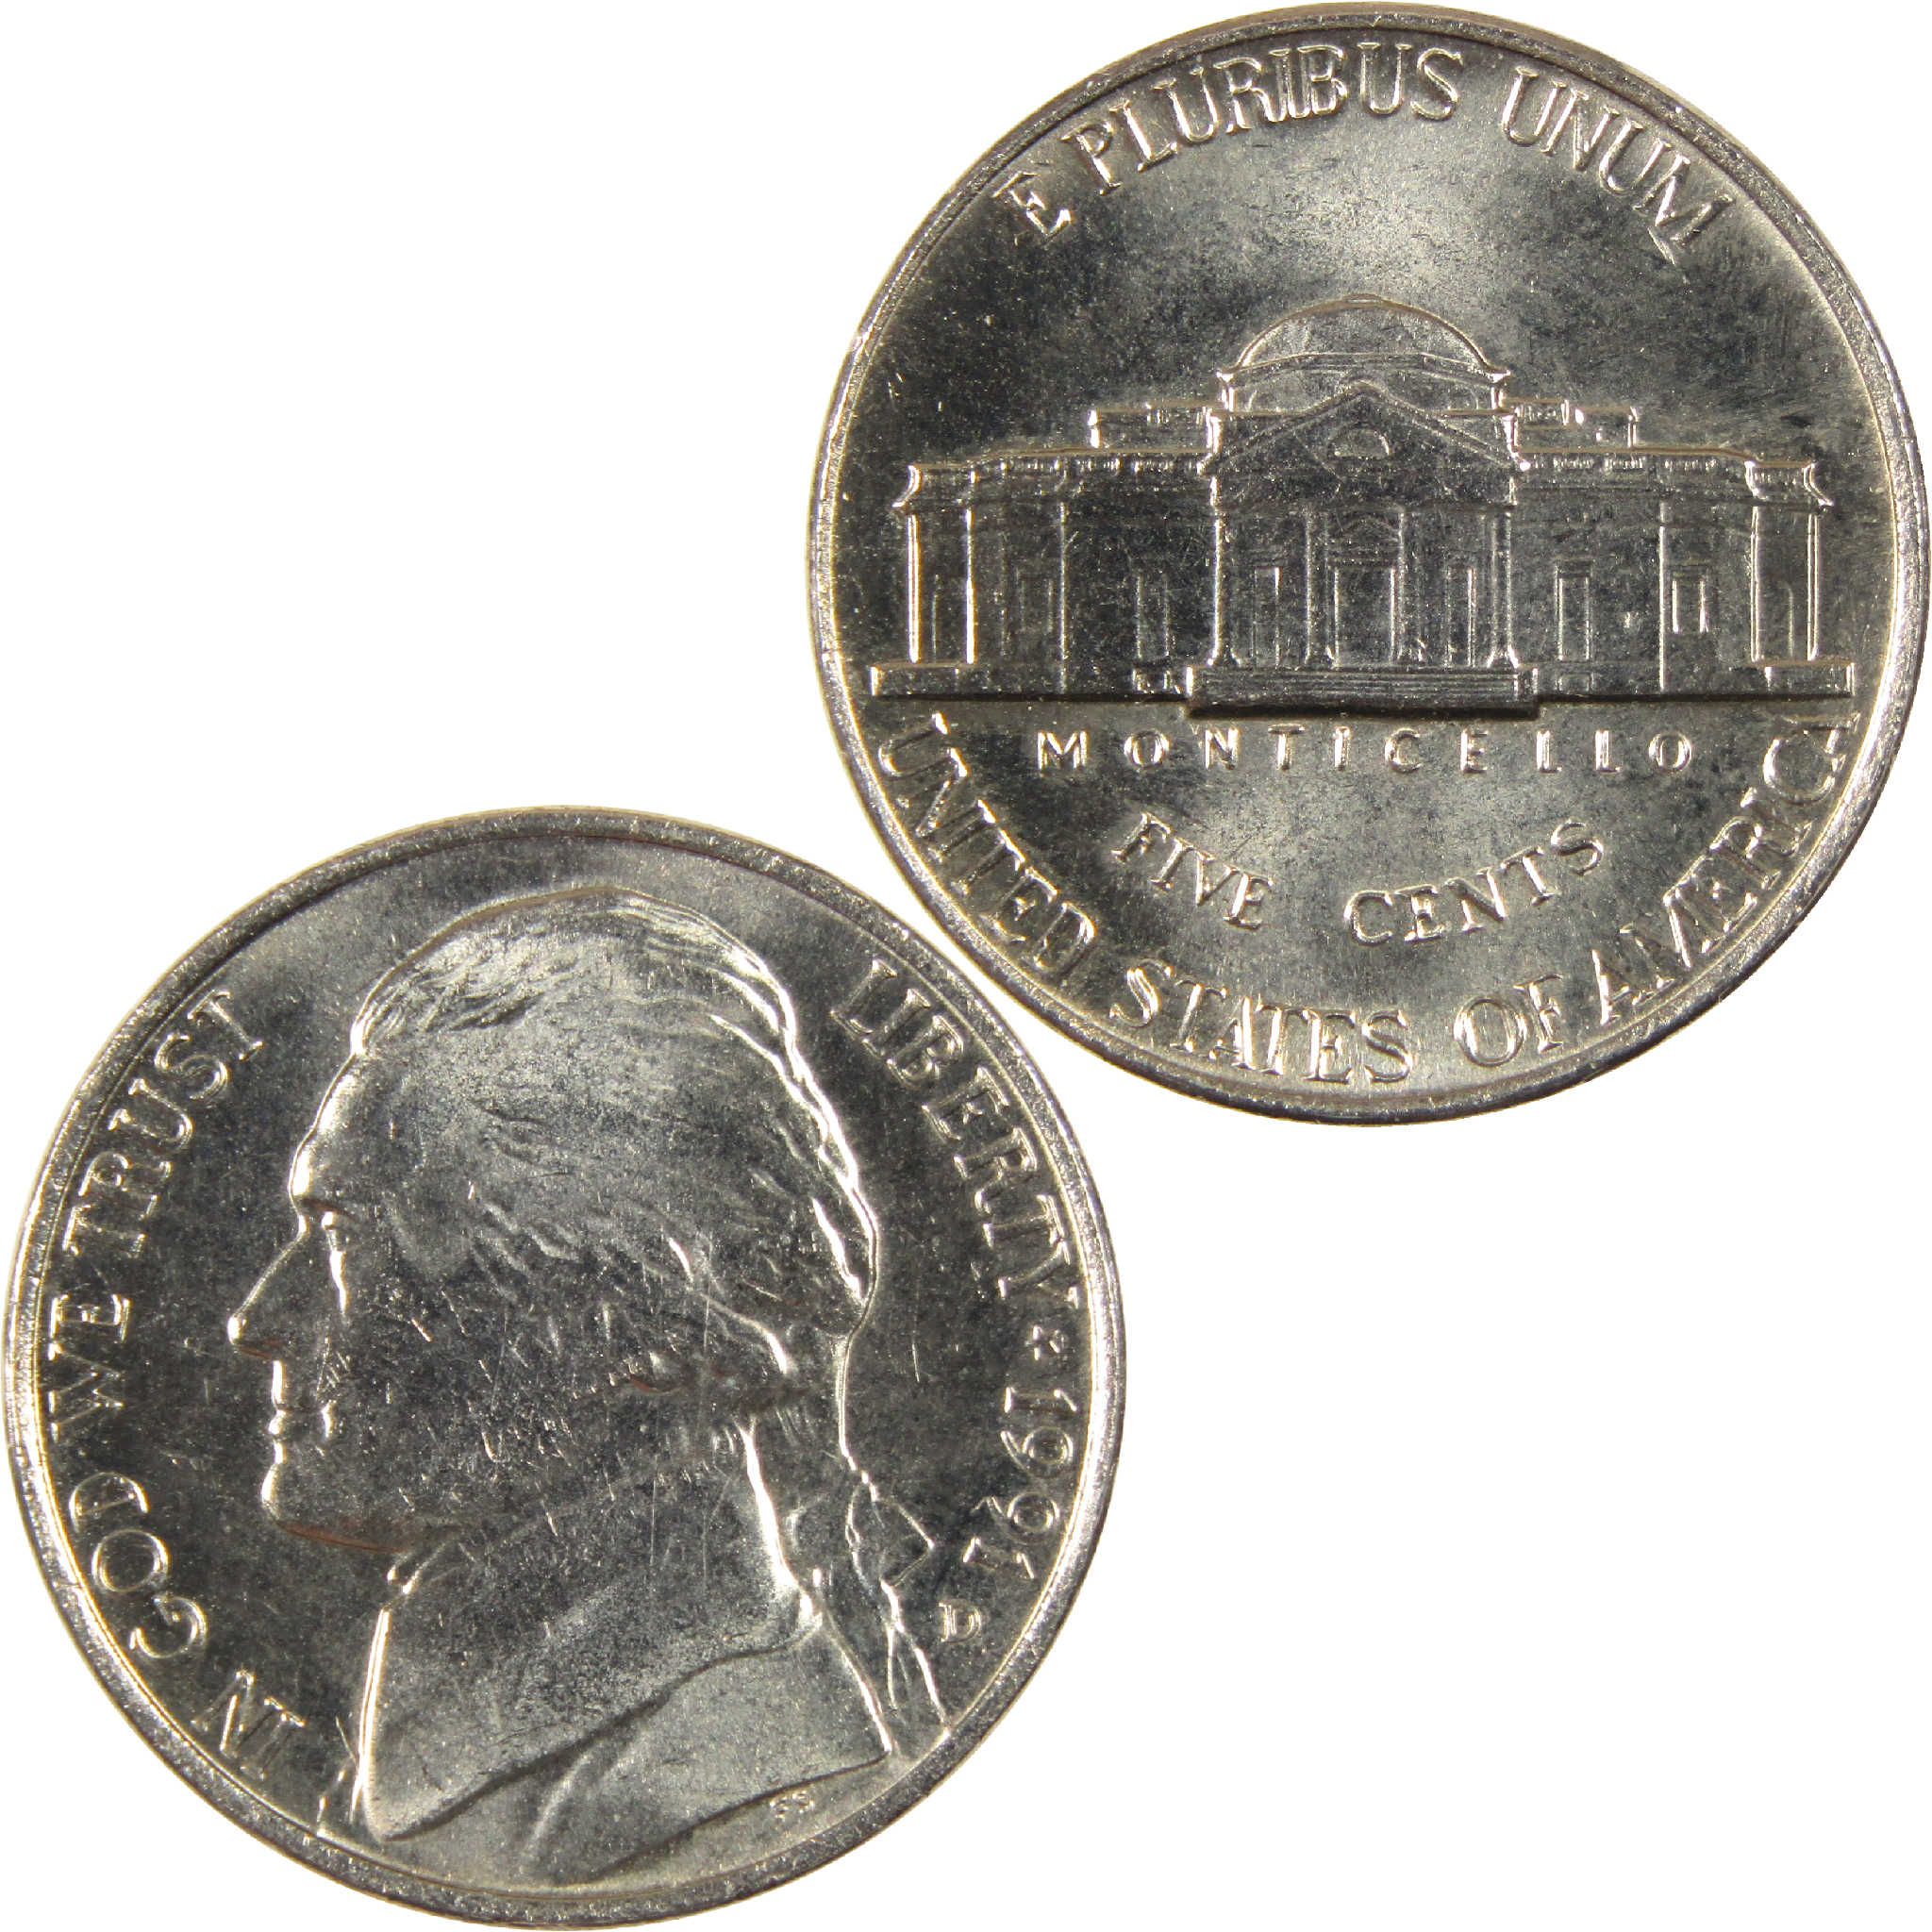 1991 D Jefferson Nickel Uncirculated 5c Coin